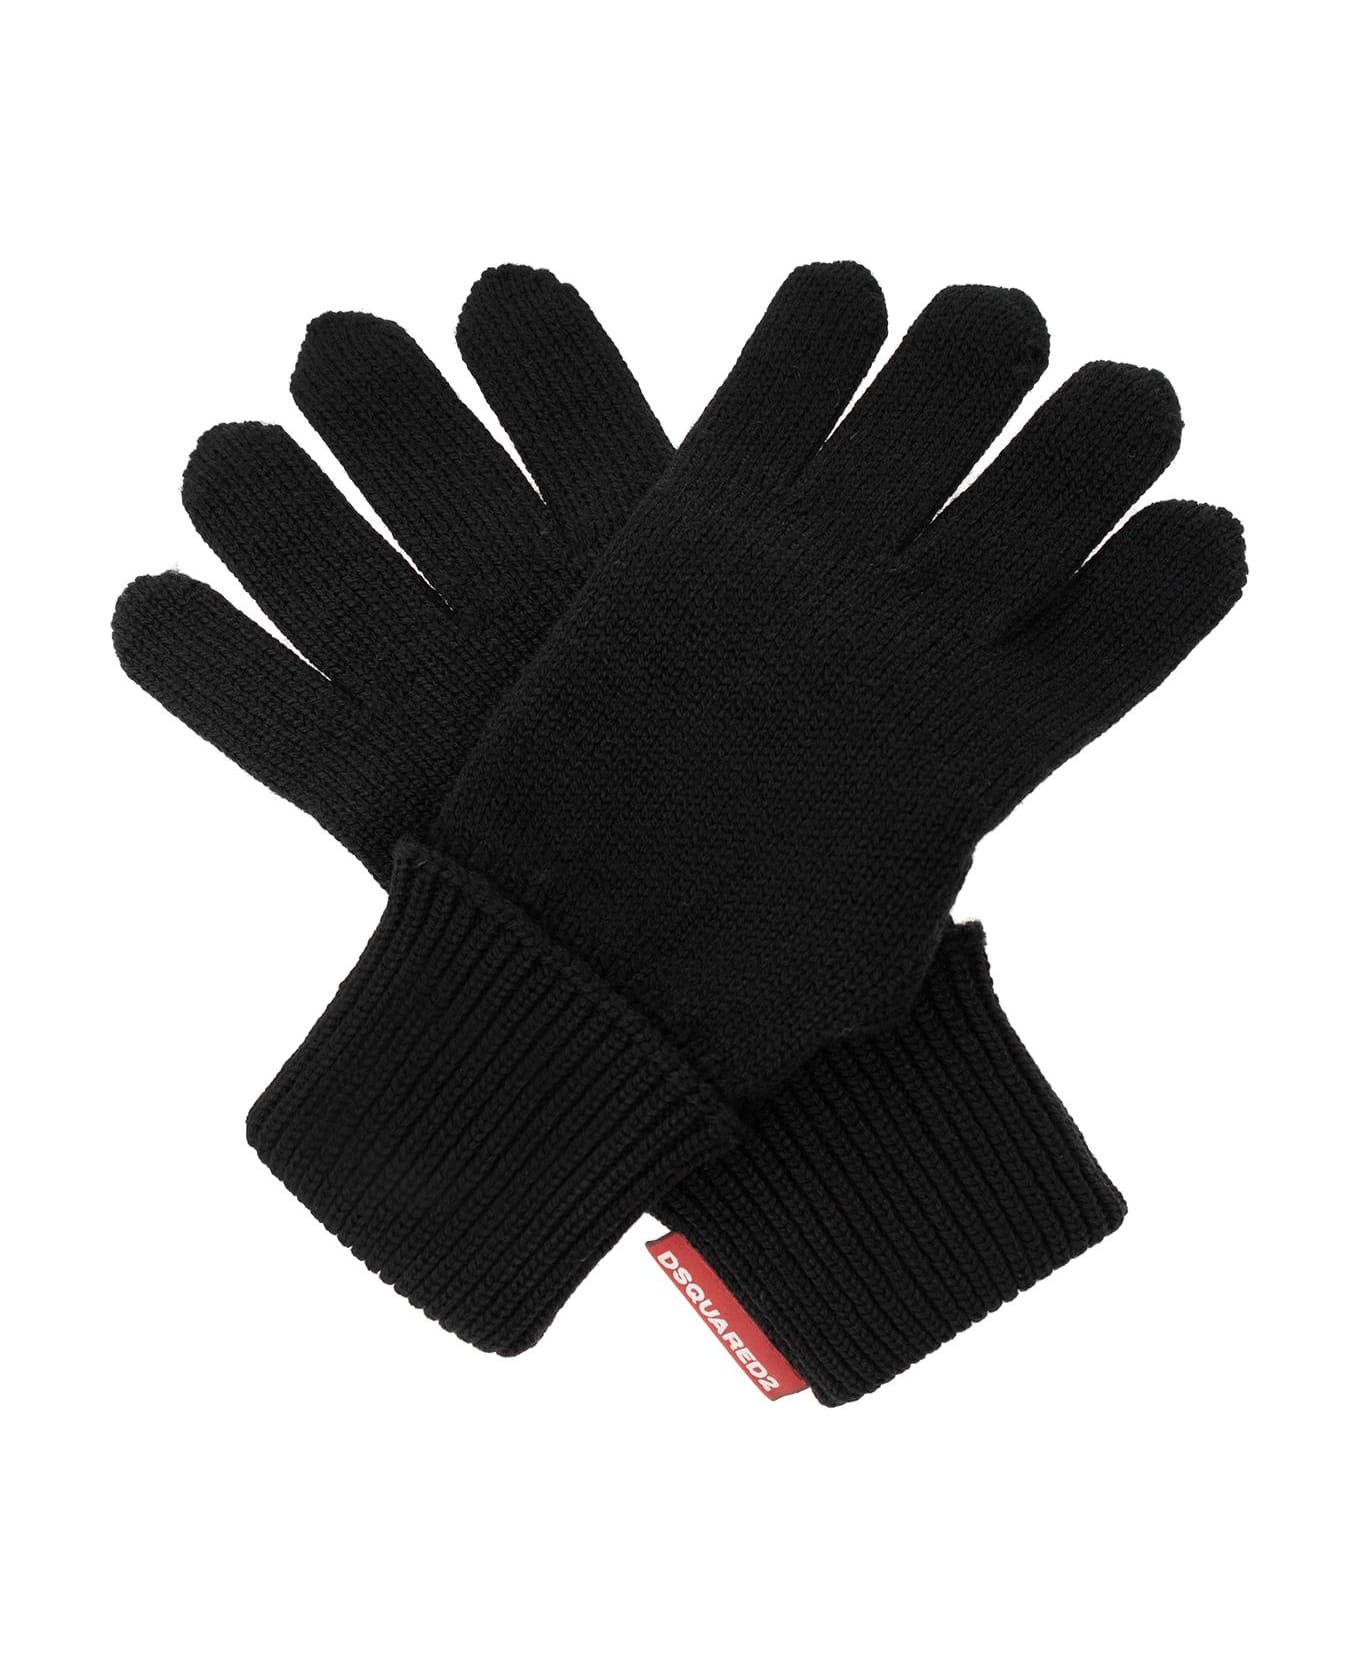 Dsquared2 Wool Kit: Beanie & Gloves 手袋